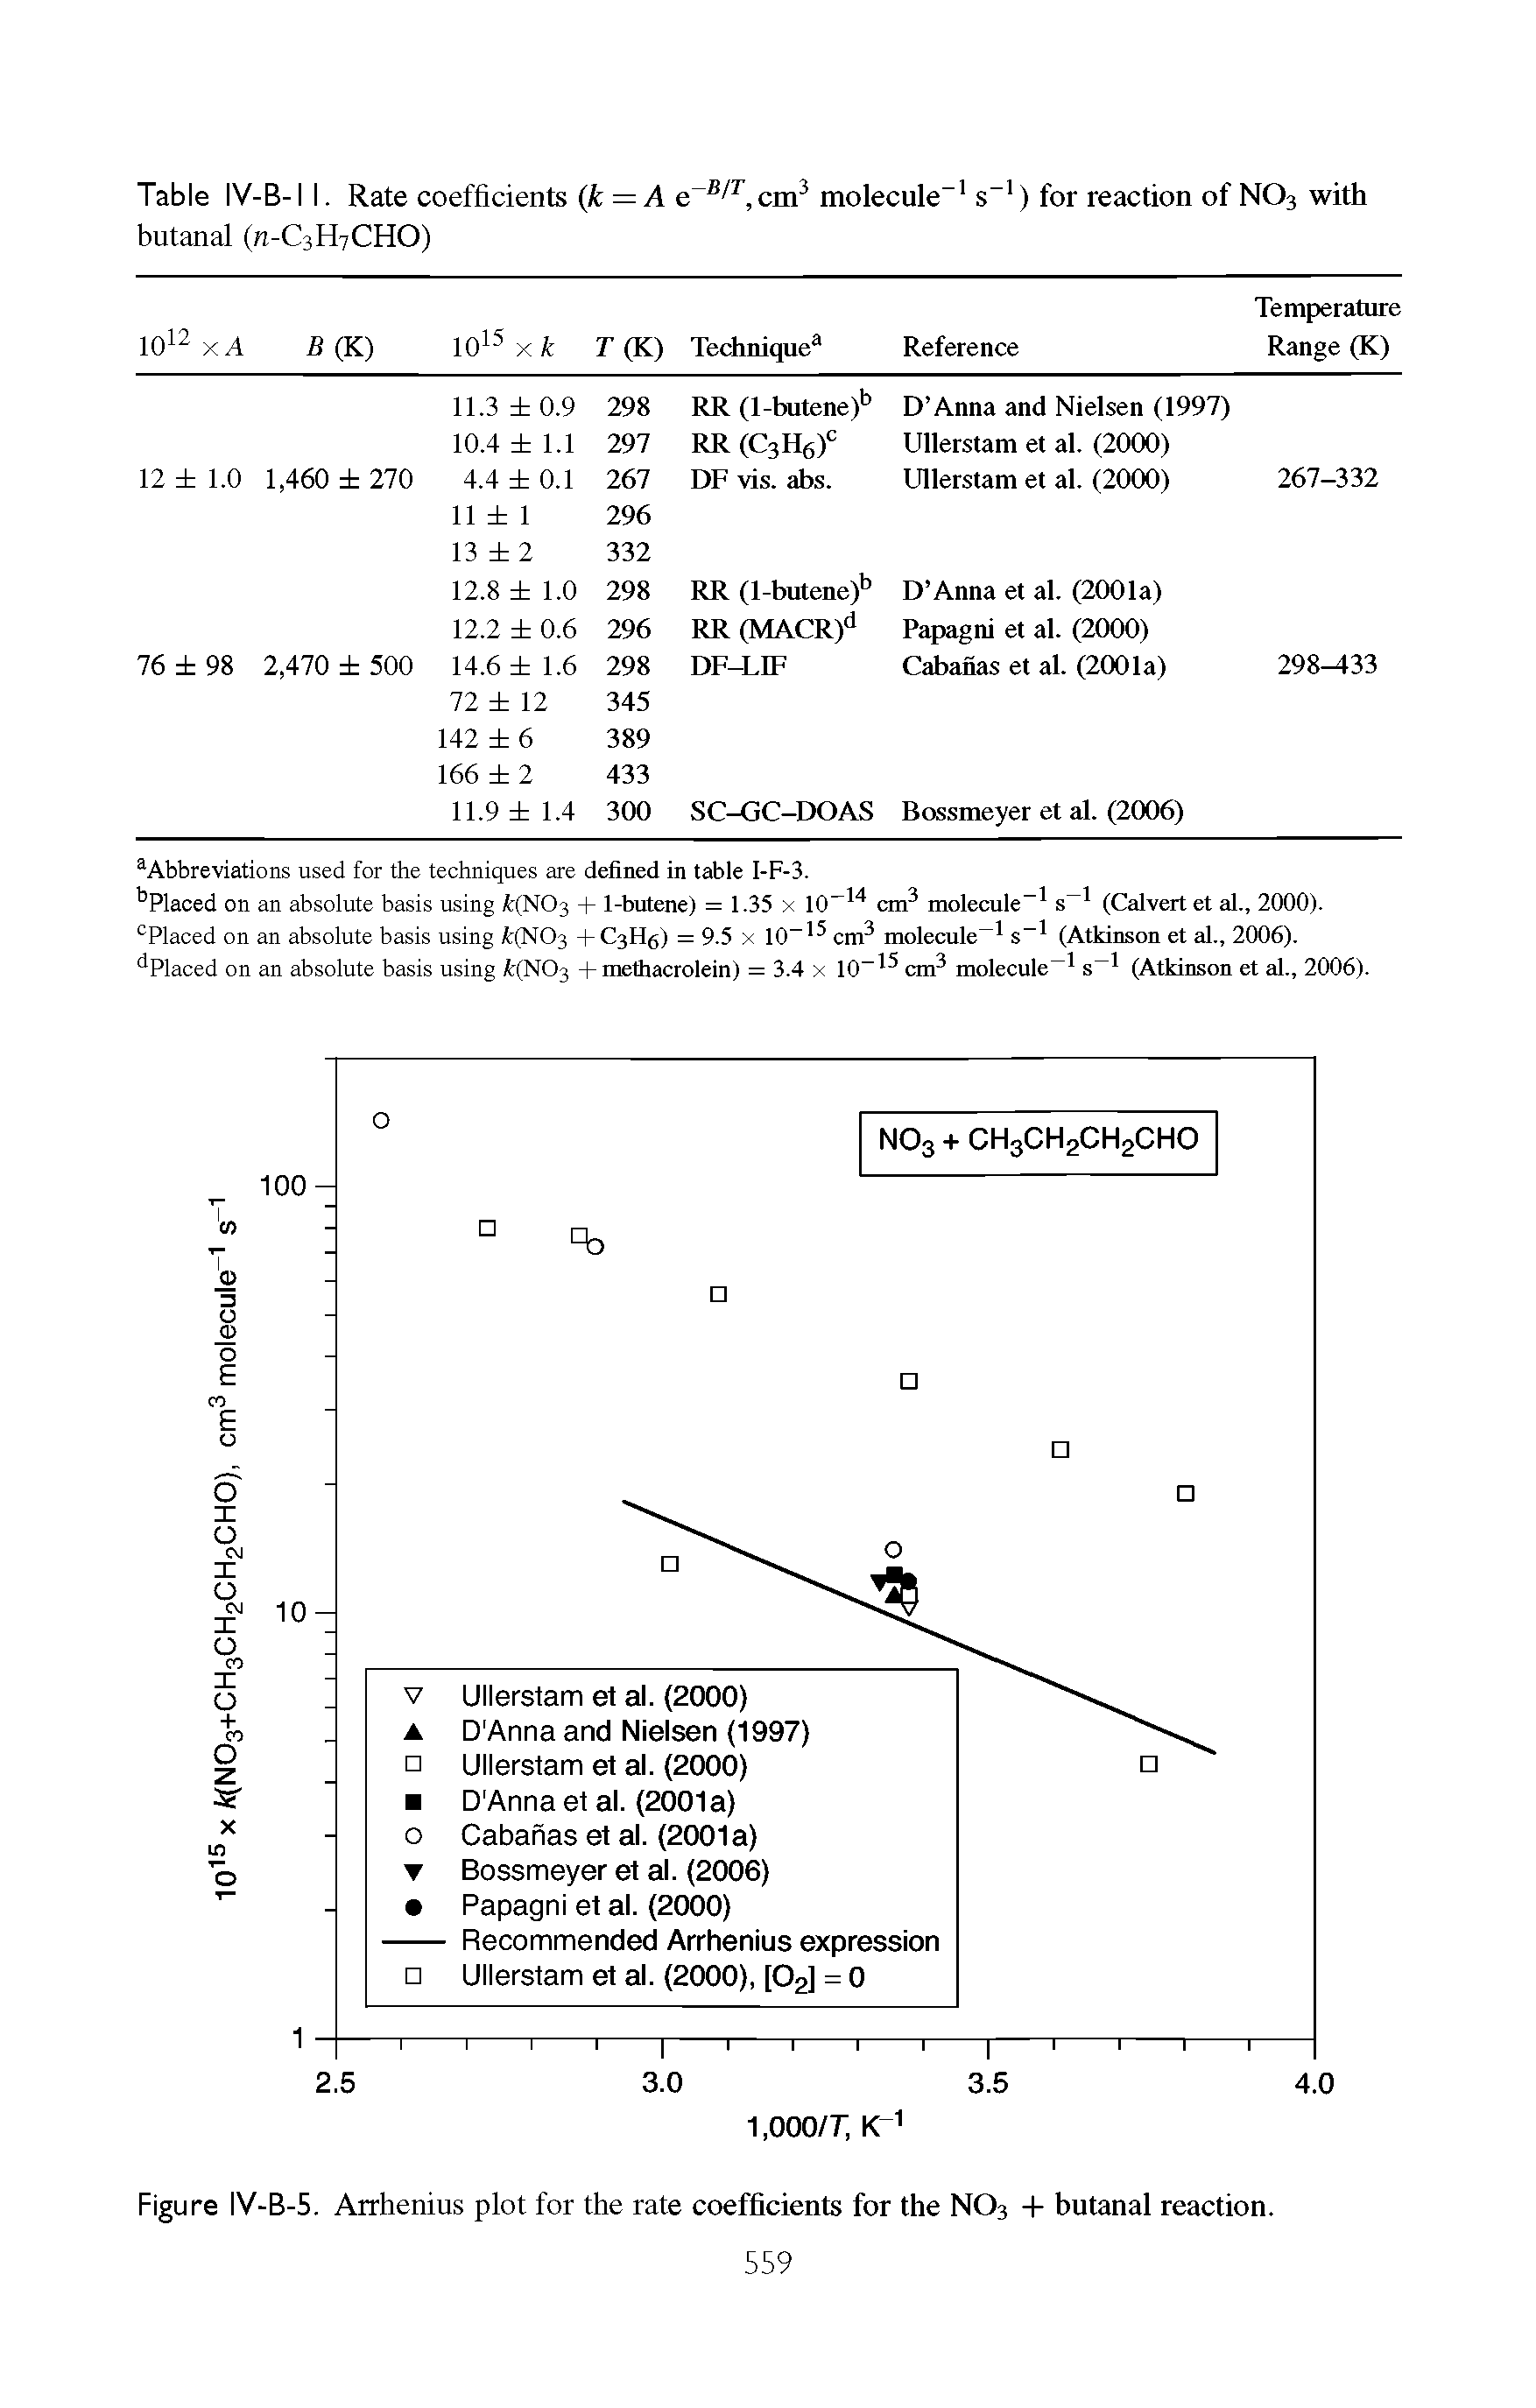 Figure IV-B-5. Arrhenius plot for the rate coefficients for the NO3 + butanal reaction.